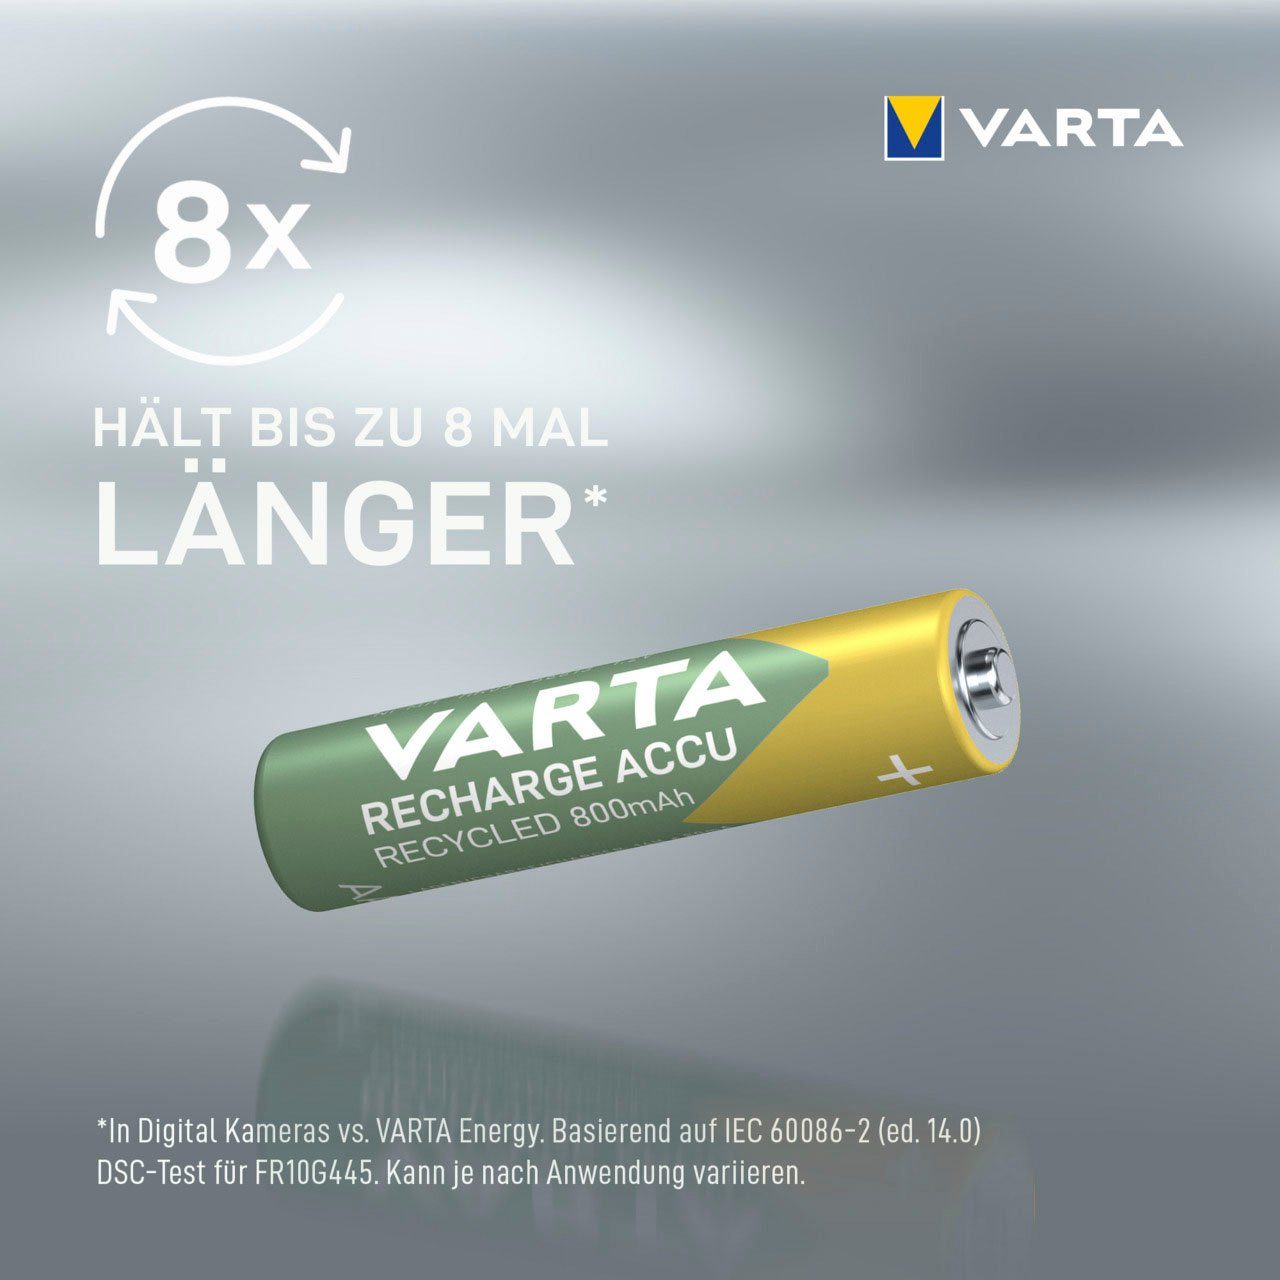 wiederaufladbar Recharge St), Akku Accu wiederauflaudbare Recycled VARTA (1,2 Micro mAh 800 VARTA Akkus V, 4